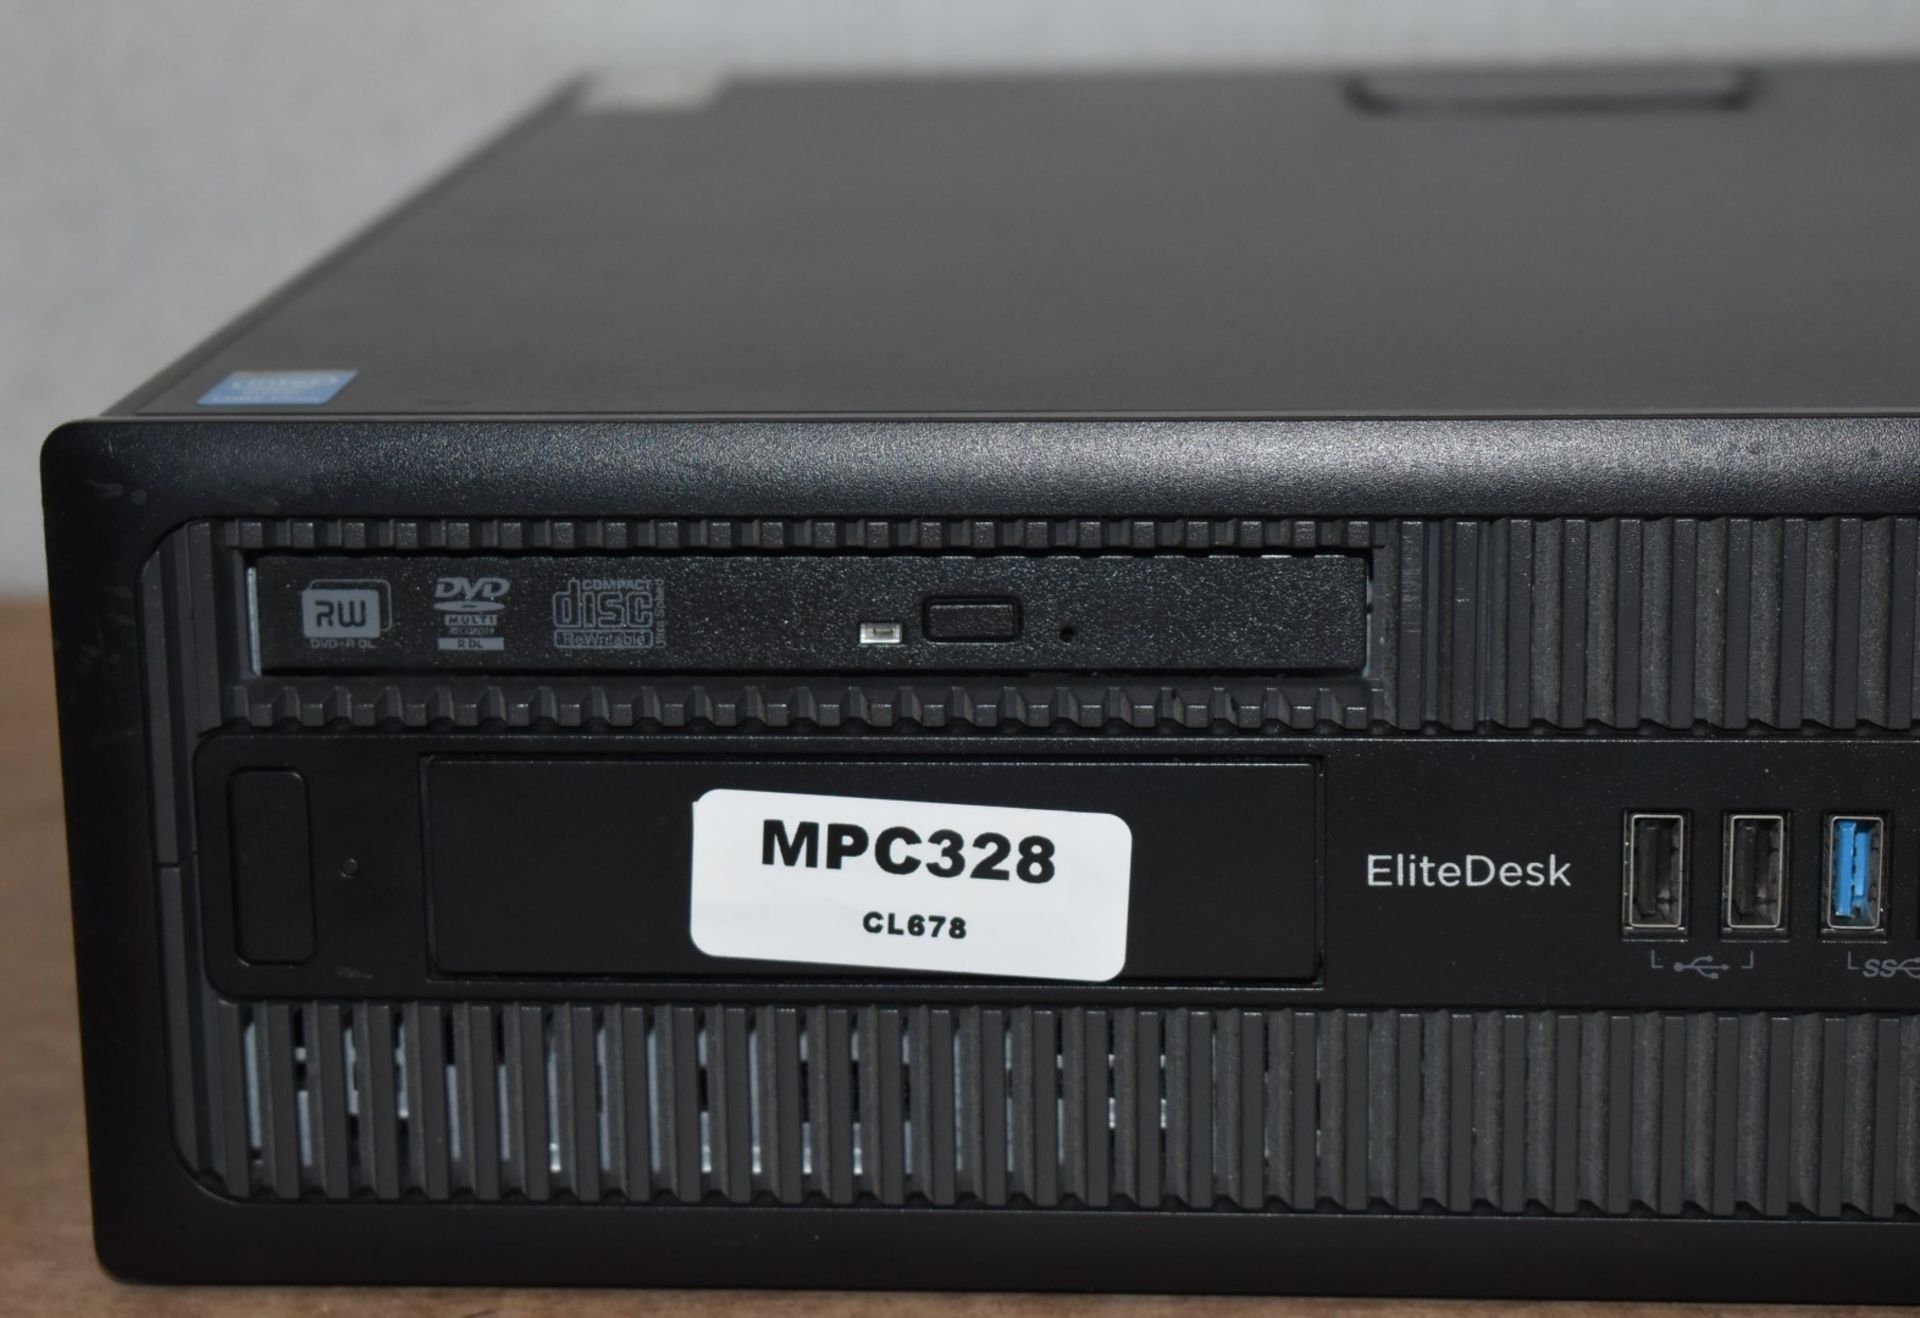 1 x HP Elite Desk 800 G1 SFF Desktop PC - Features an Intel i7-4770 3.4hz Quad Core Processor, 8gb - Image 7 of 7